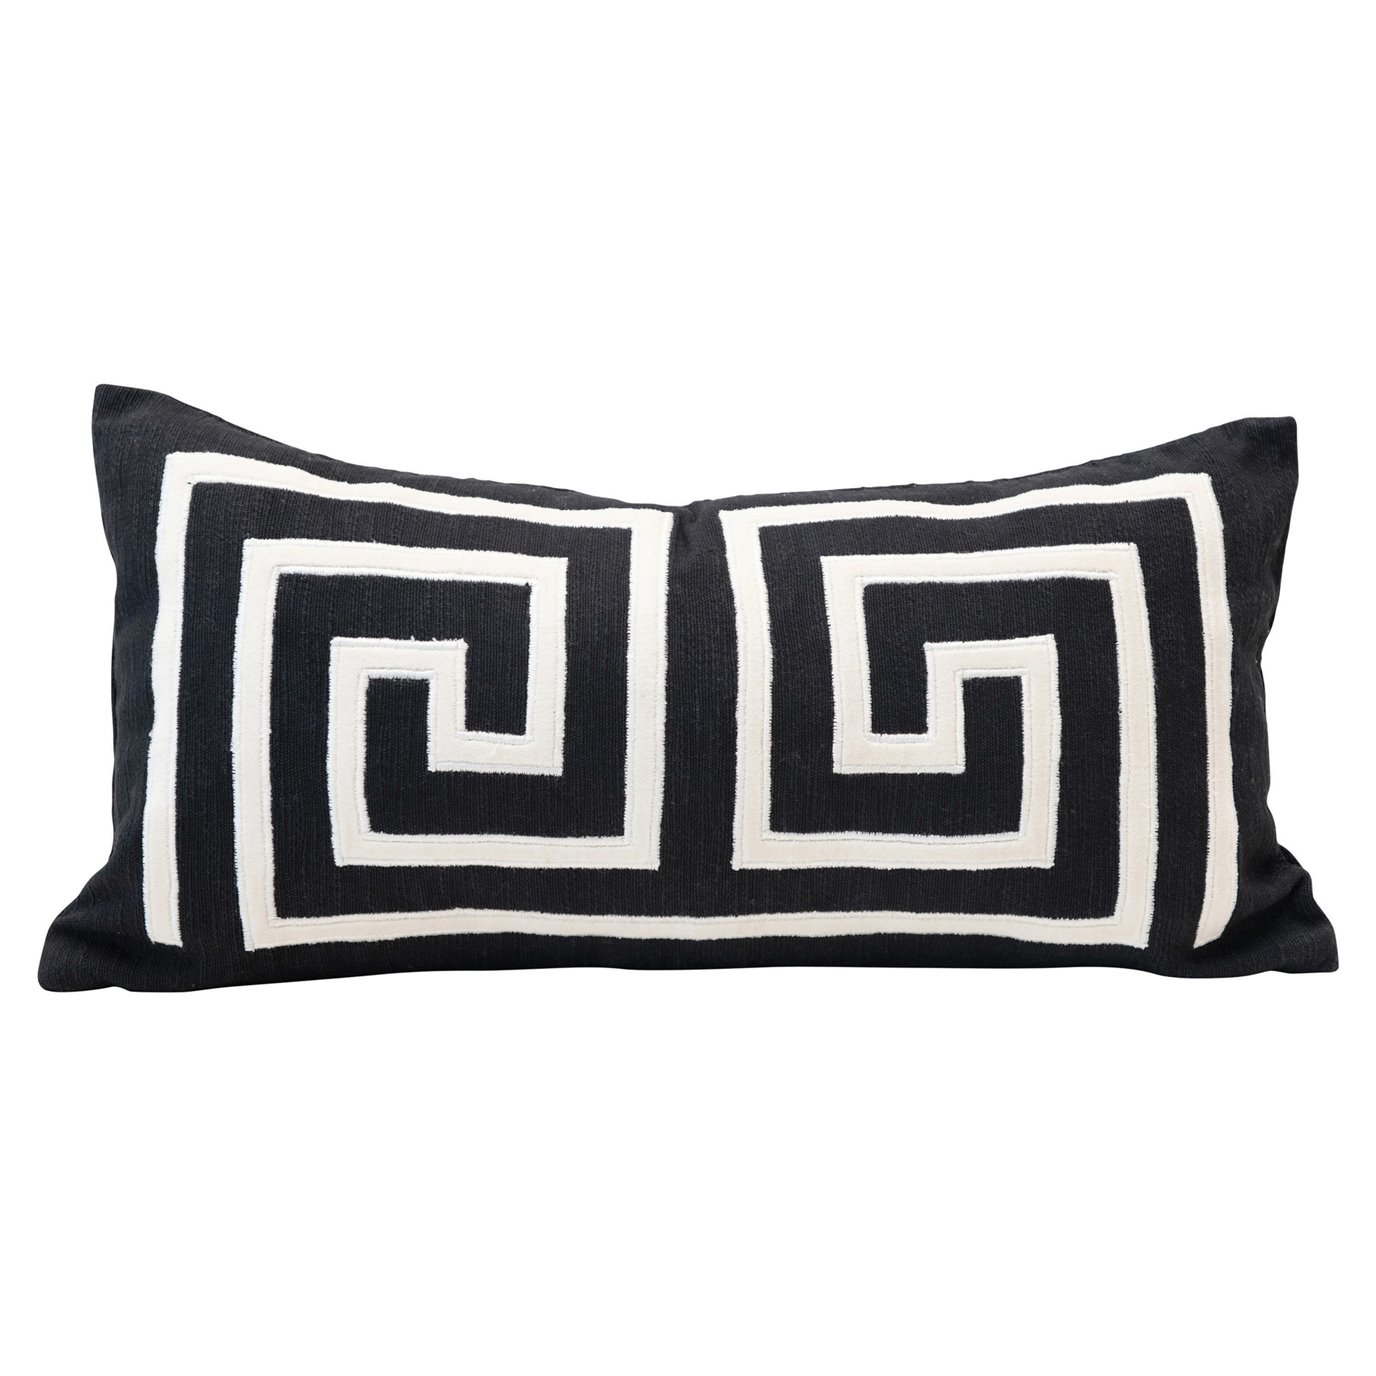 Woven Cotton Lumbar Pillow with Appliqued Design, Black & White